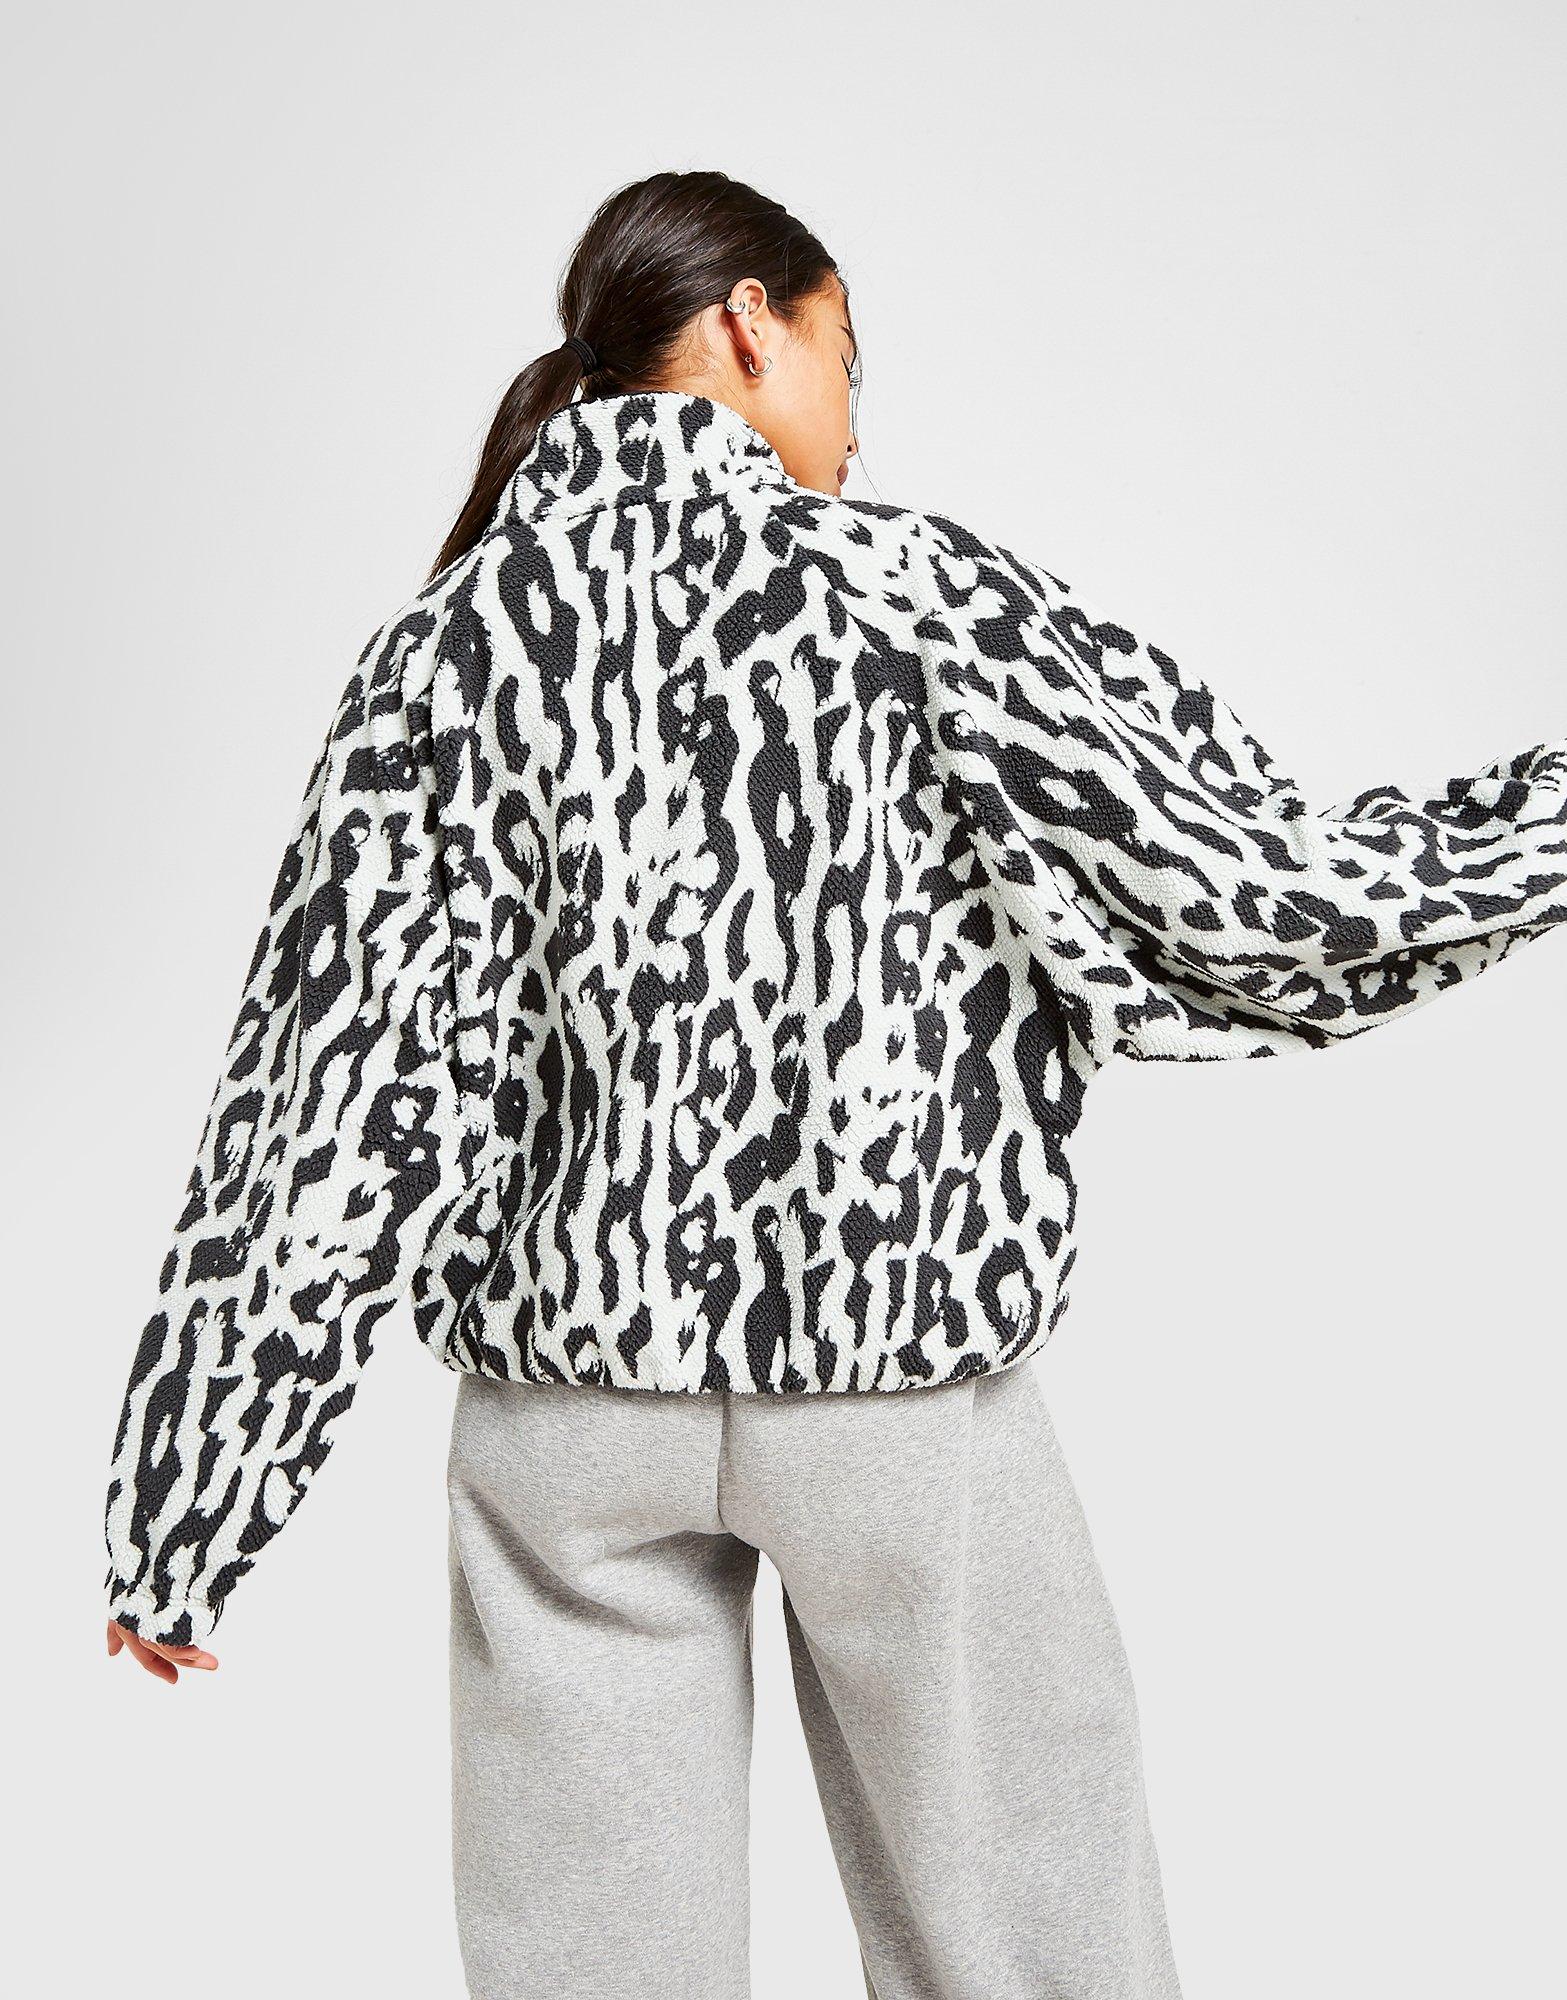 nike leopard print jacket